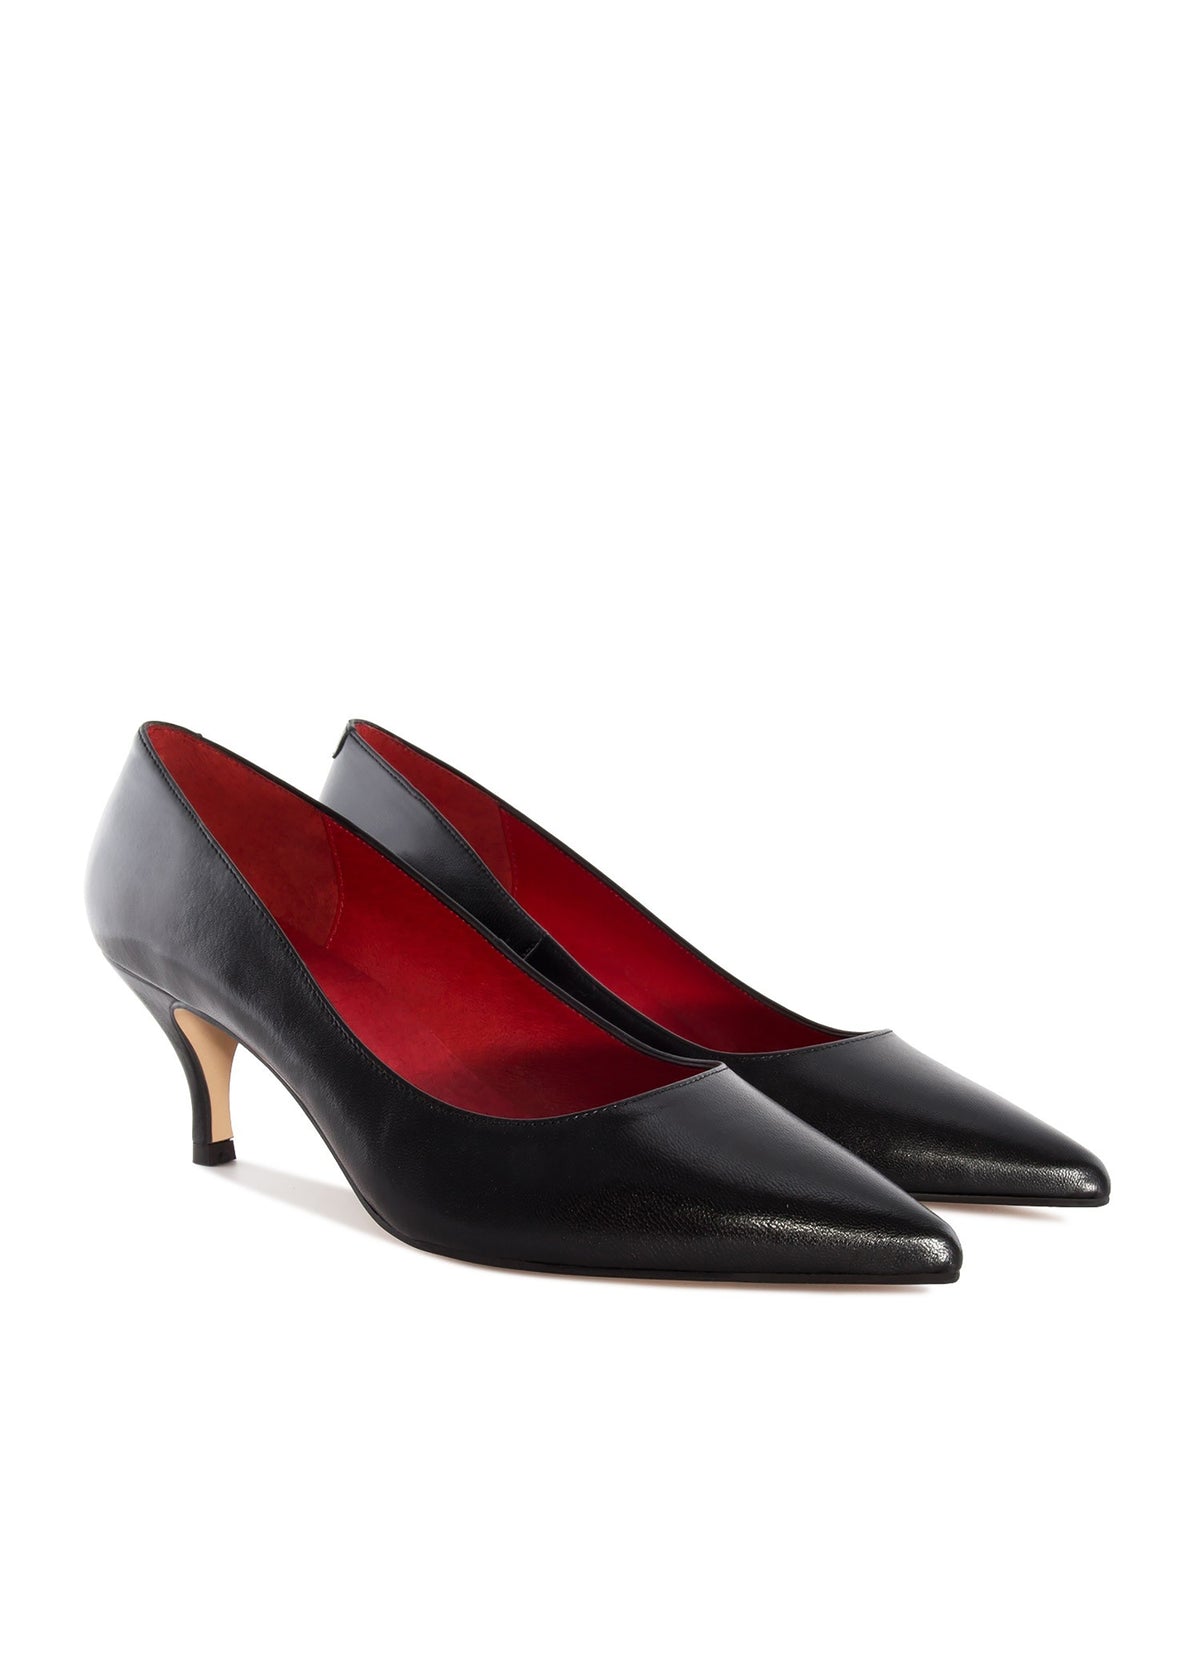 Stiletto heels - Amanda, black leather